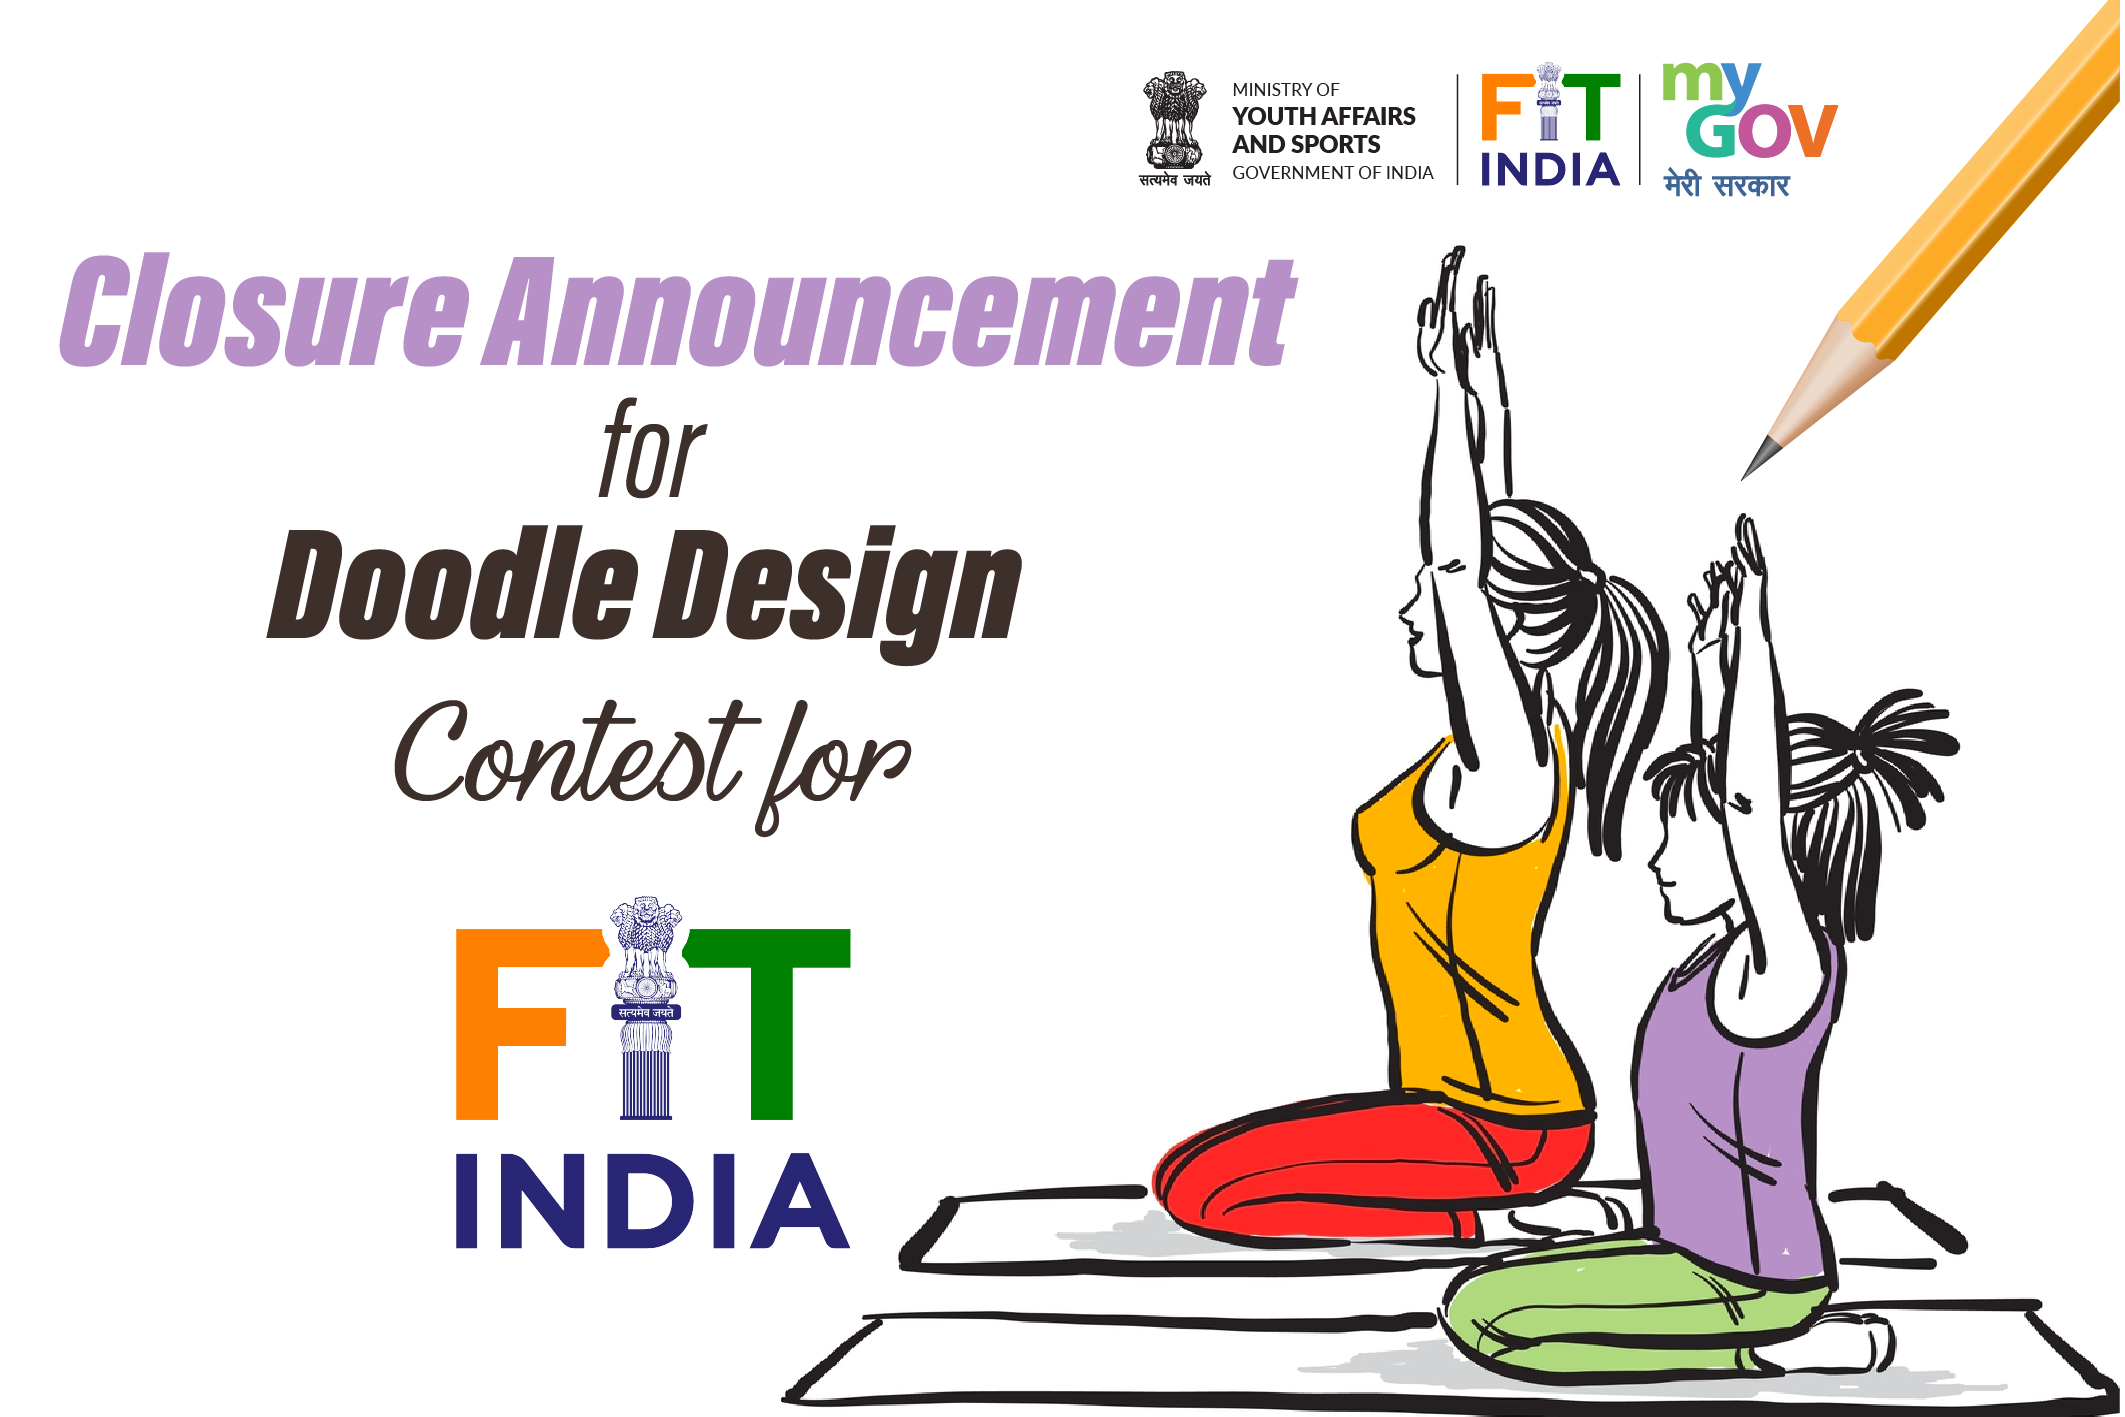 Closure Announcement for Doodle Design Contest for Fit India